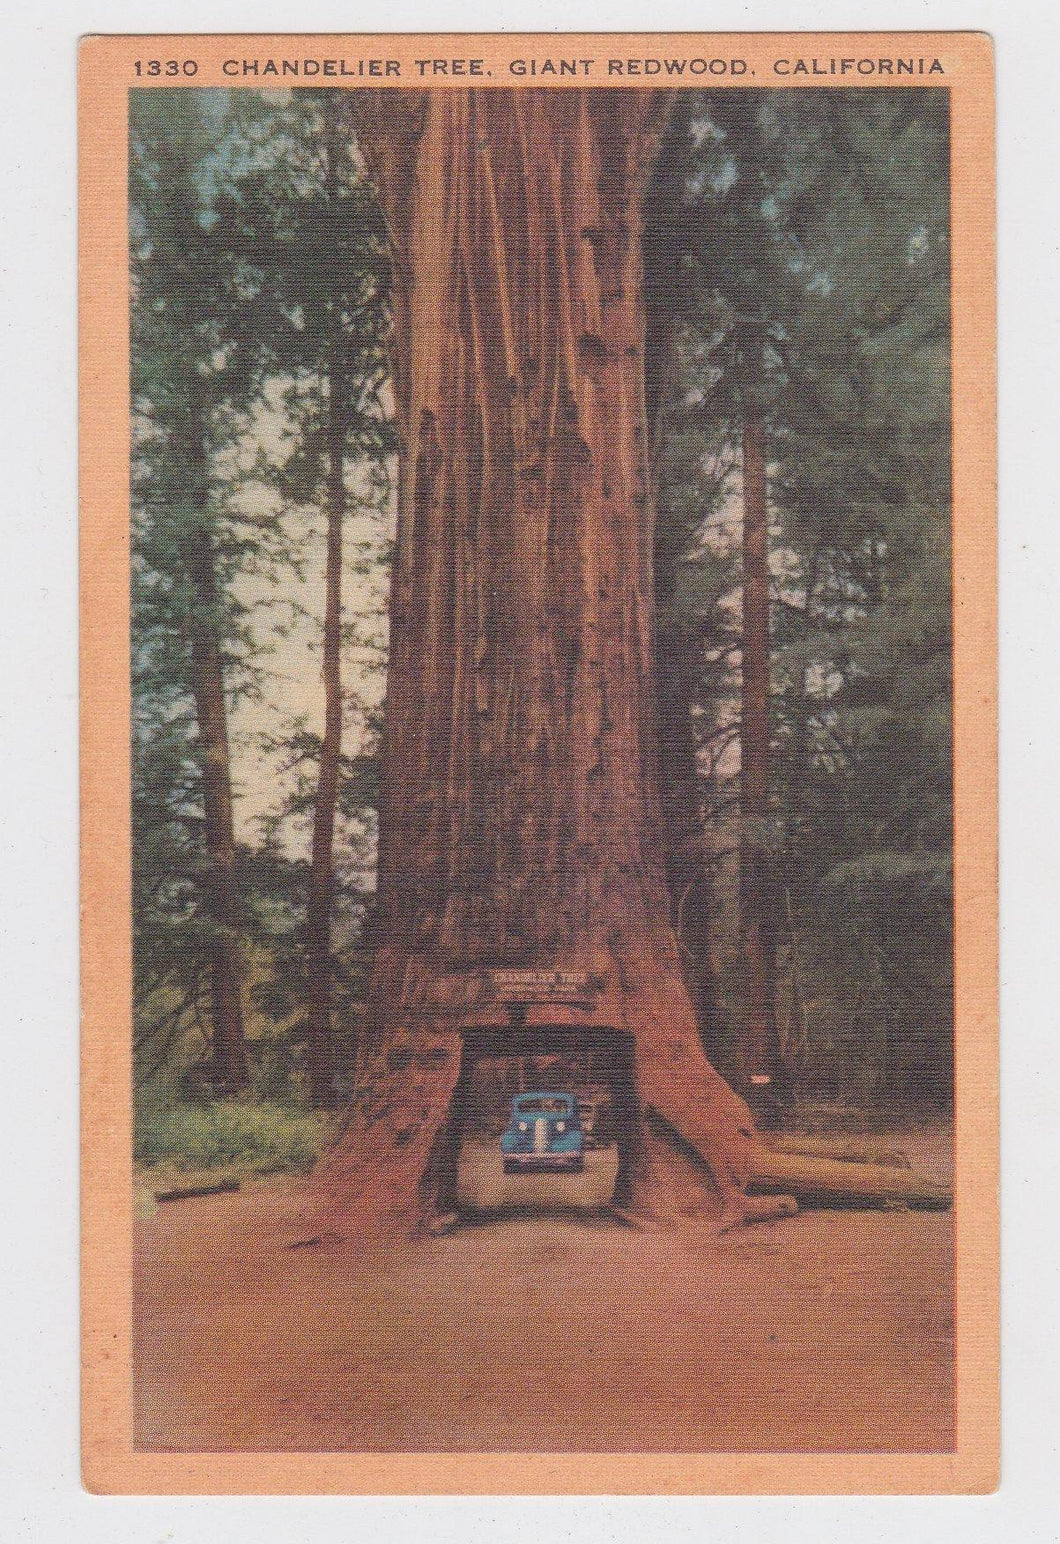 Chandelier Tree Giant Redwood Drive Through Tree California 1940's Linen Postcard - TulipStuff